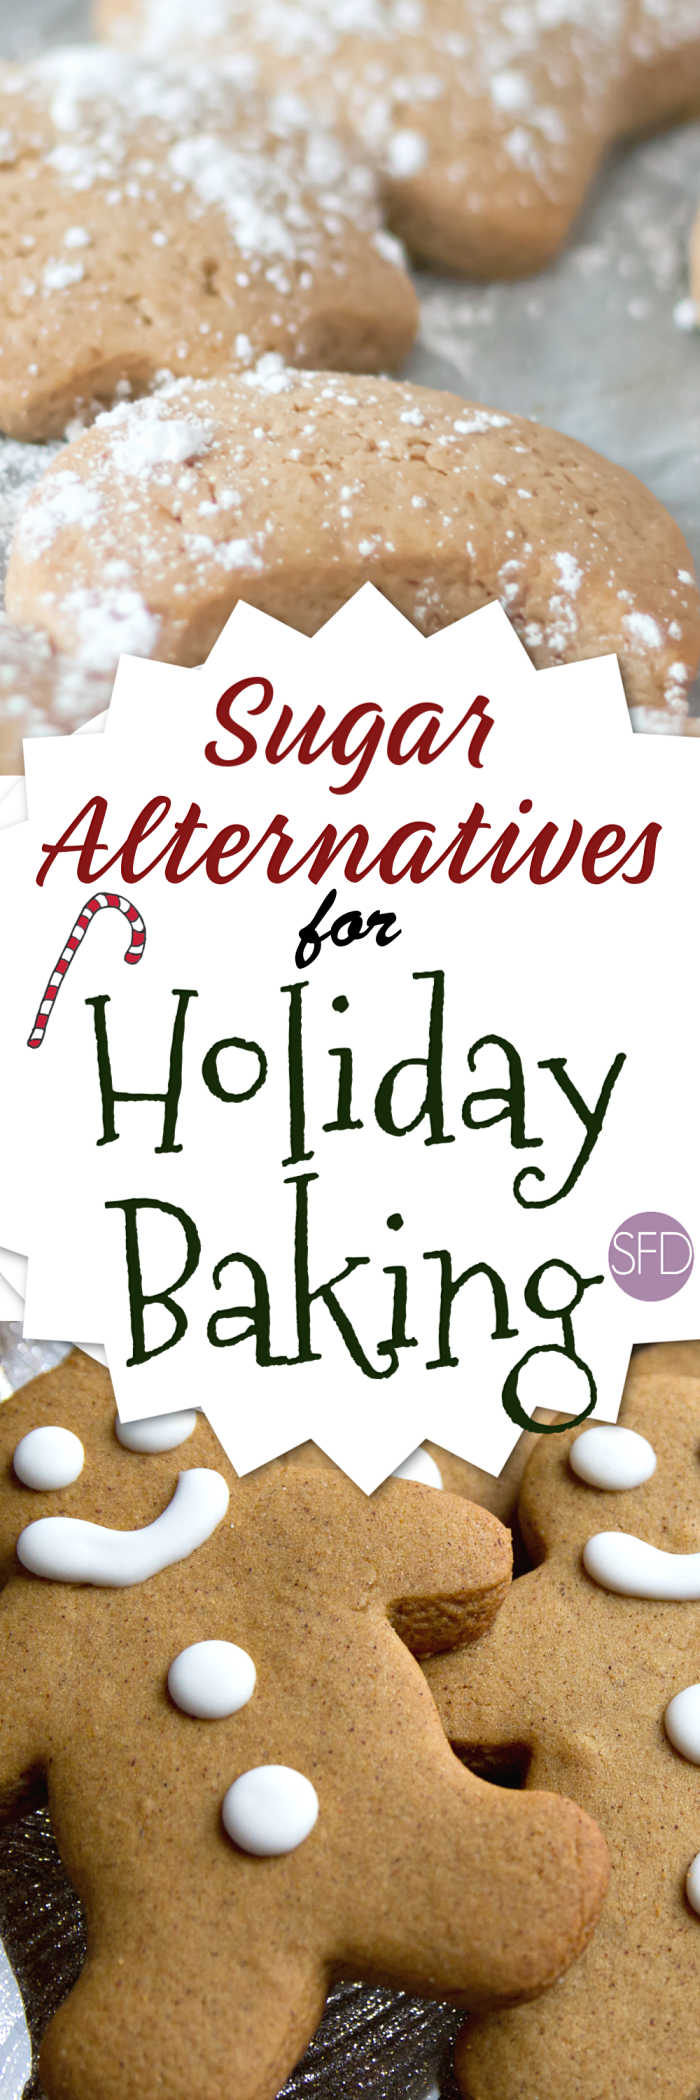 Sugar Alternatives for Holiday Baking